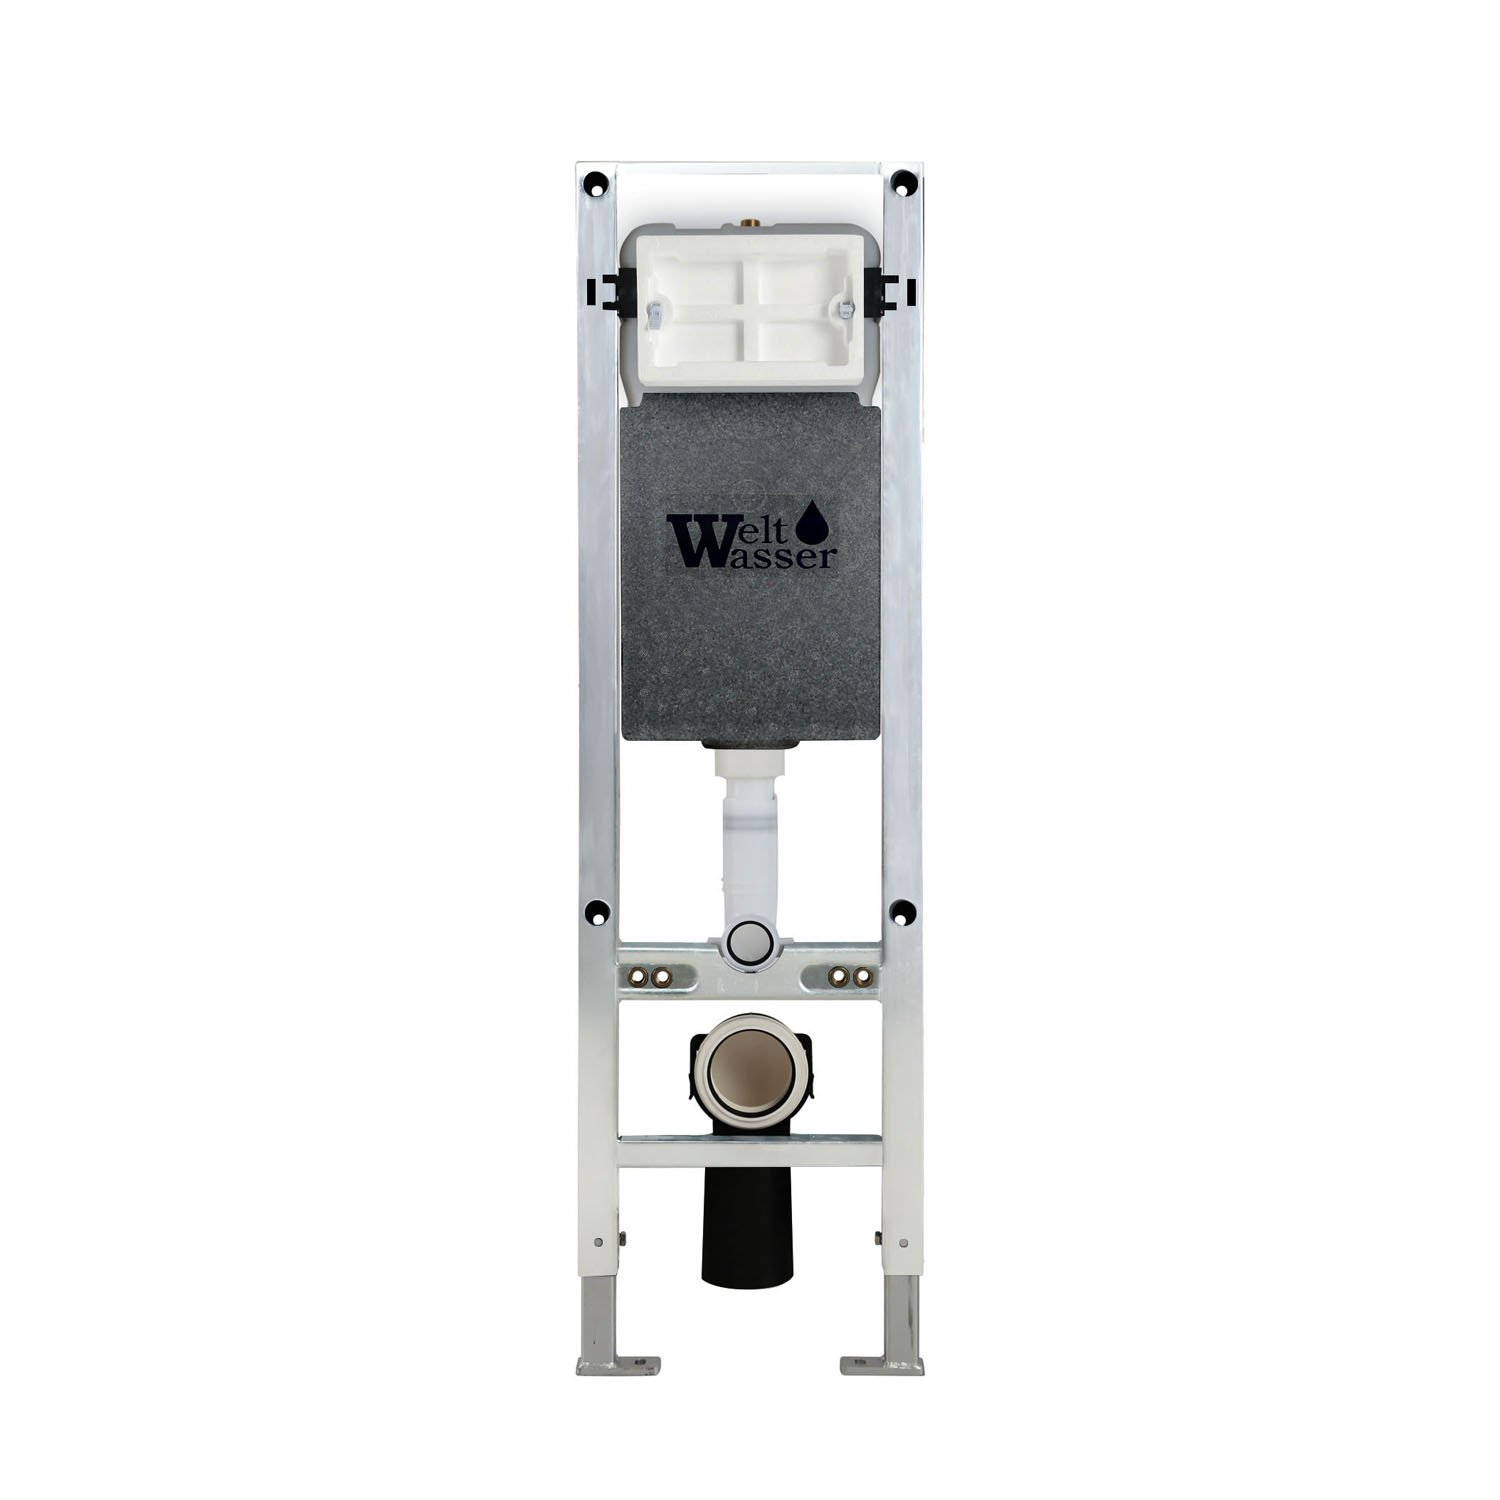 Комплект Weltwasser 10000011283 унитаза Merzbach 043 GL-WT с сиденьем микролифт и инсталляции Amberg 350 ST с кнопкой Amberg RD-CR хром - фото 1